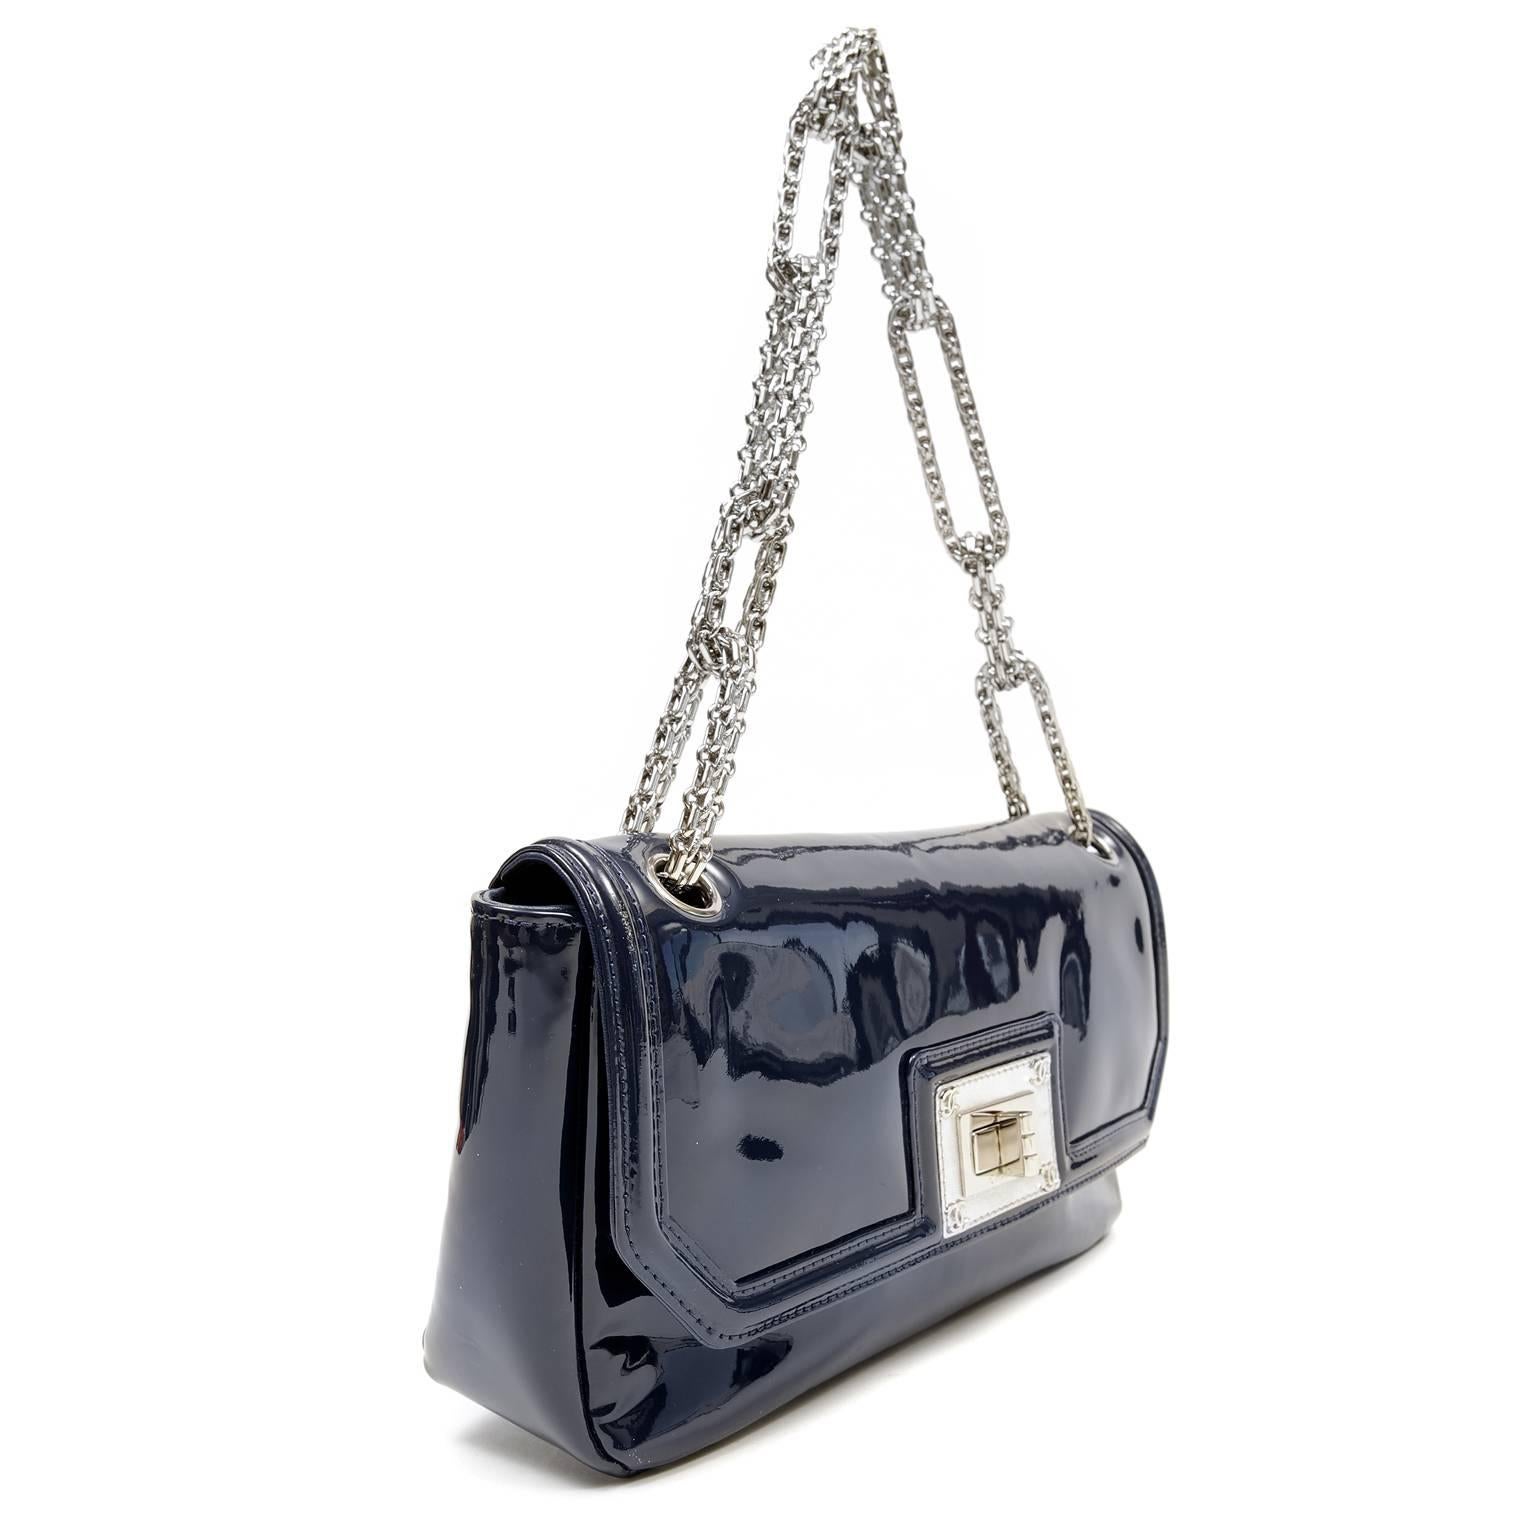 Black Chanel Navy Blue Patent Leather Reissue Flap Bag- Medium